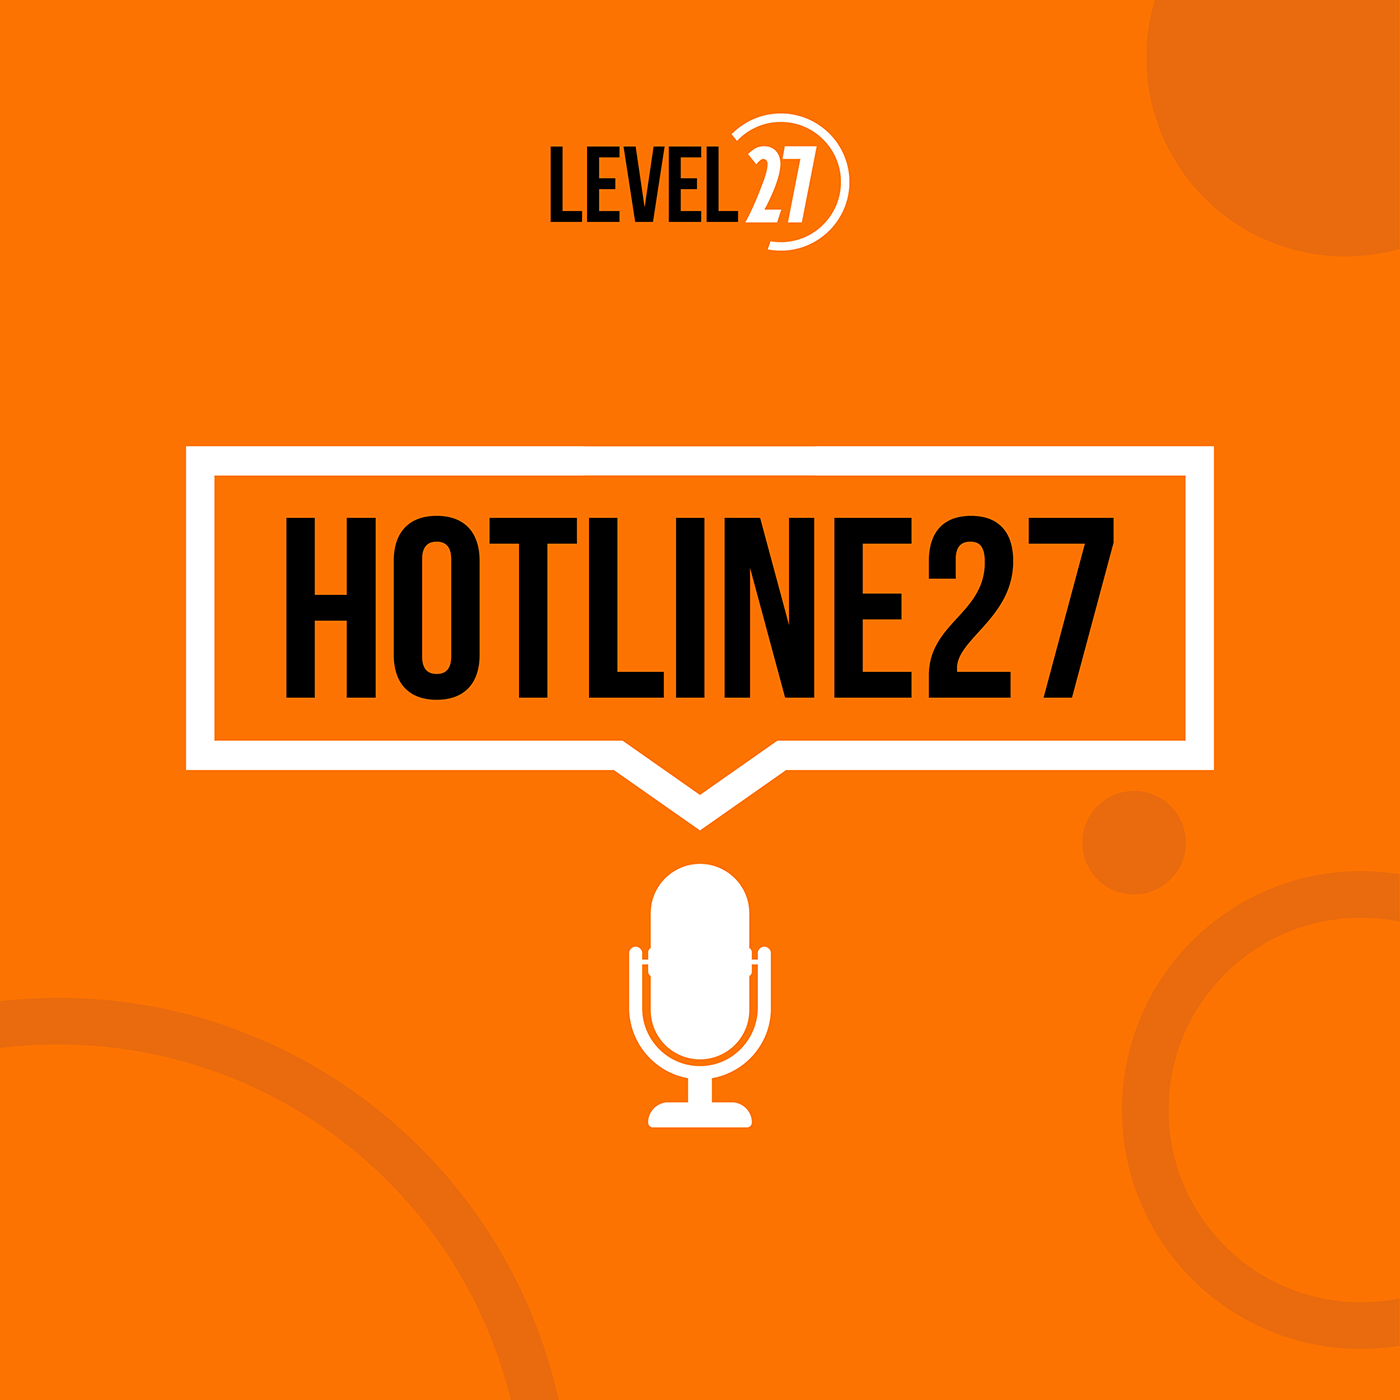 Hotline27 logo